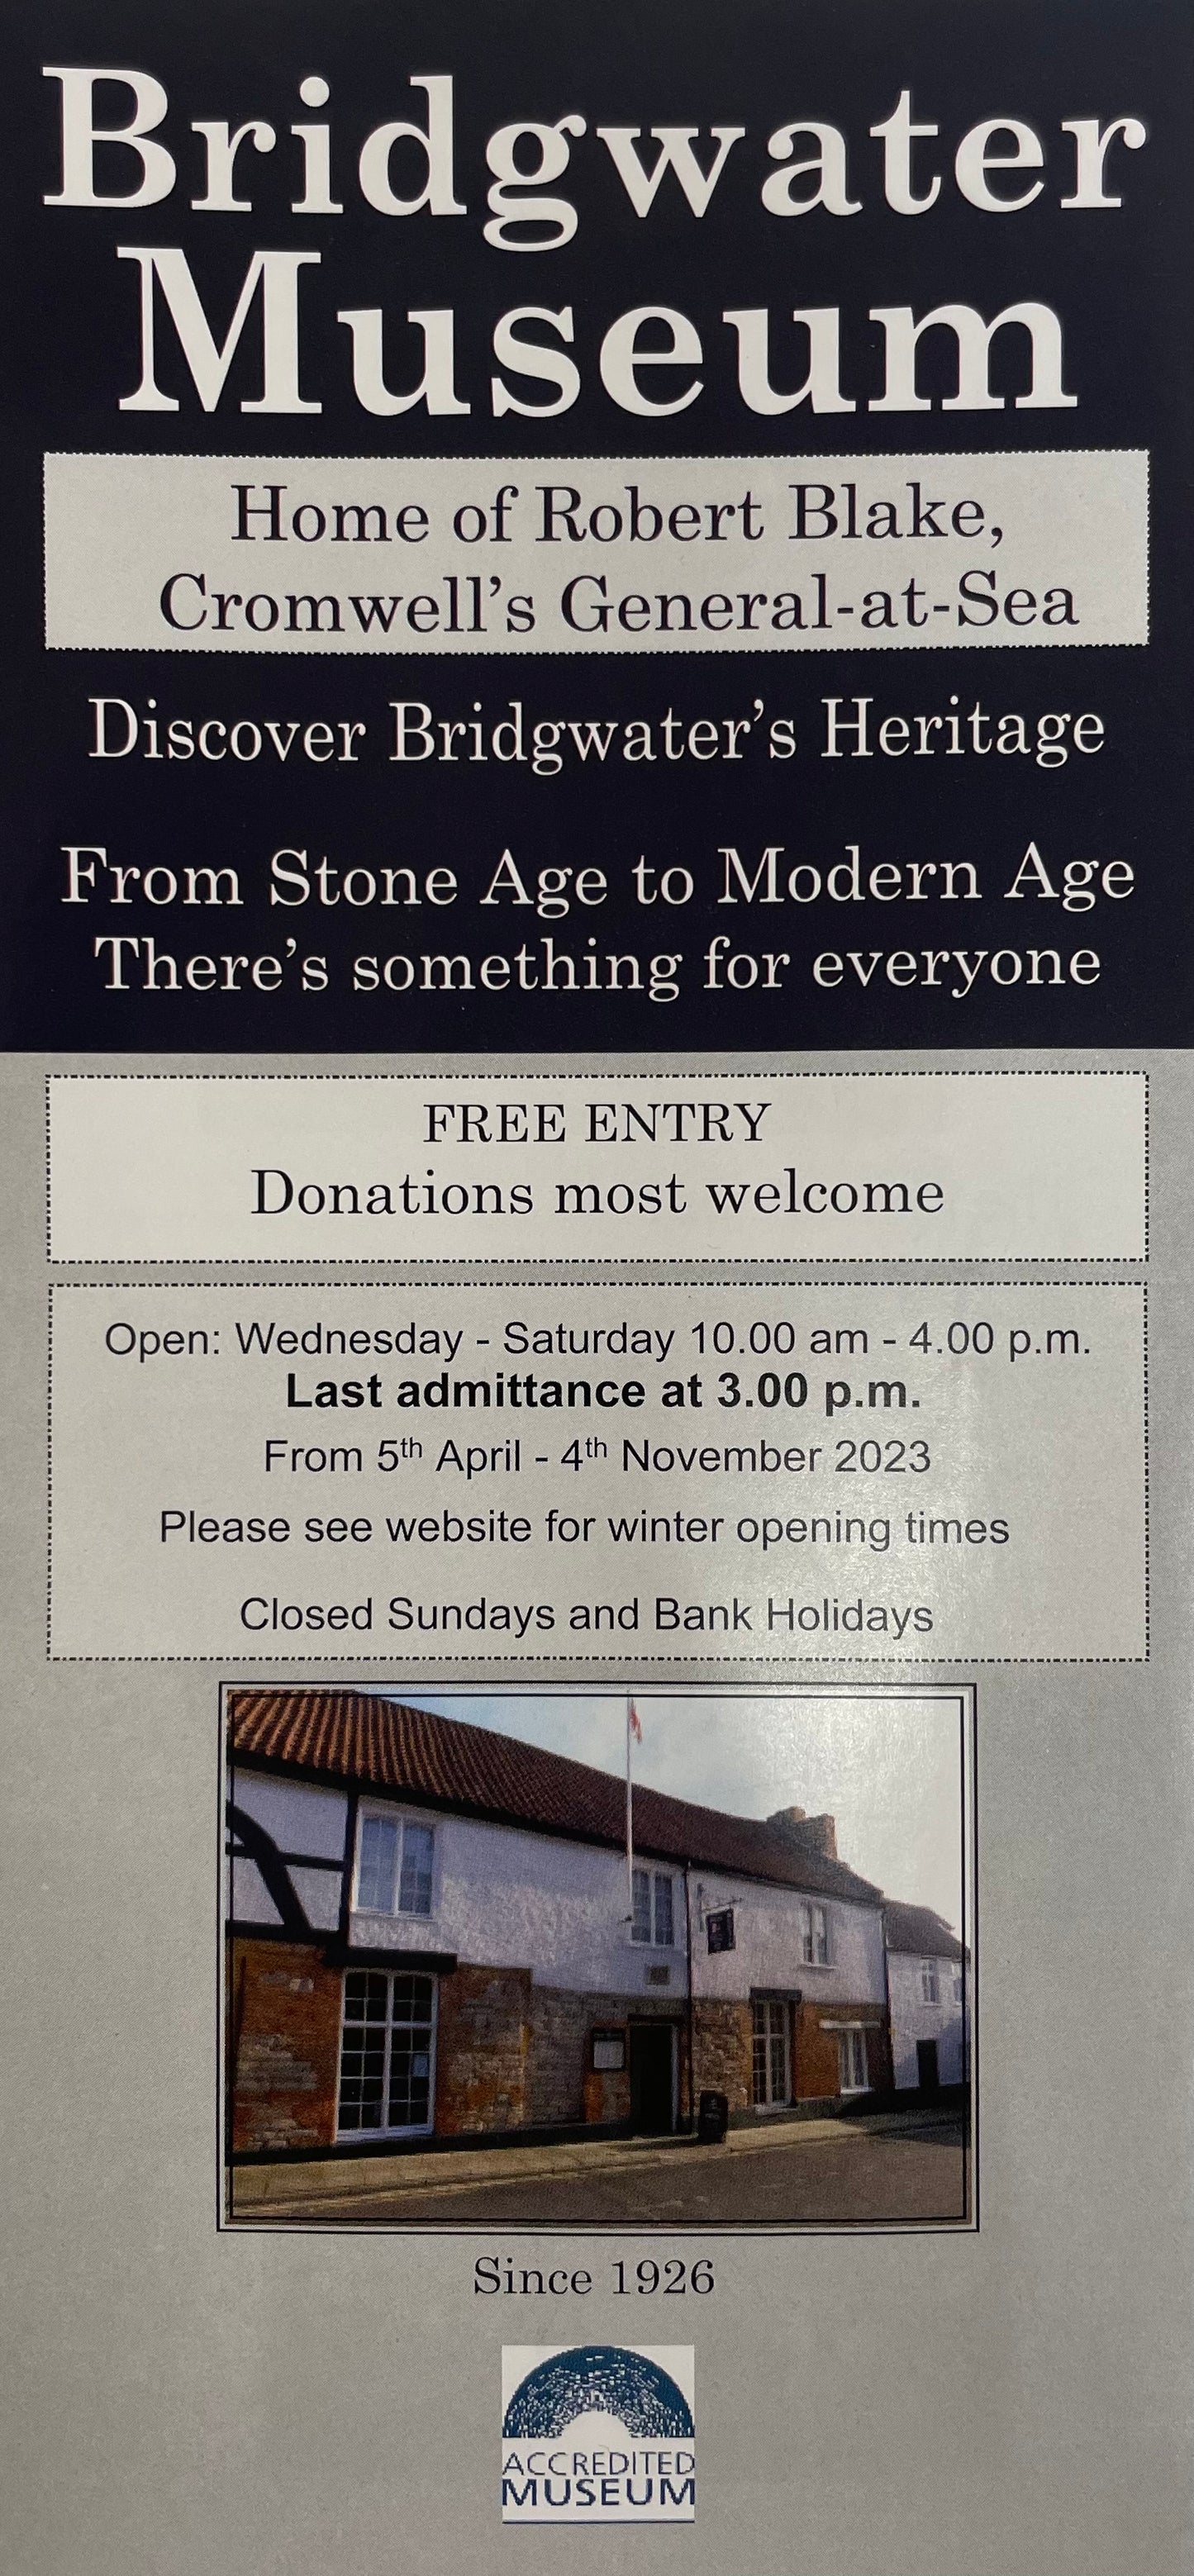 Bridgwater Museum - Home of Robert Blake - Discover Bridgewater's Heritage 2023